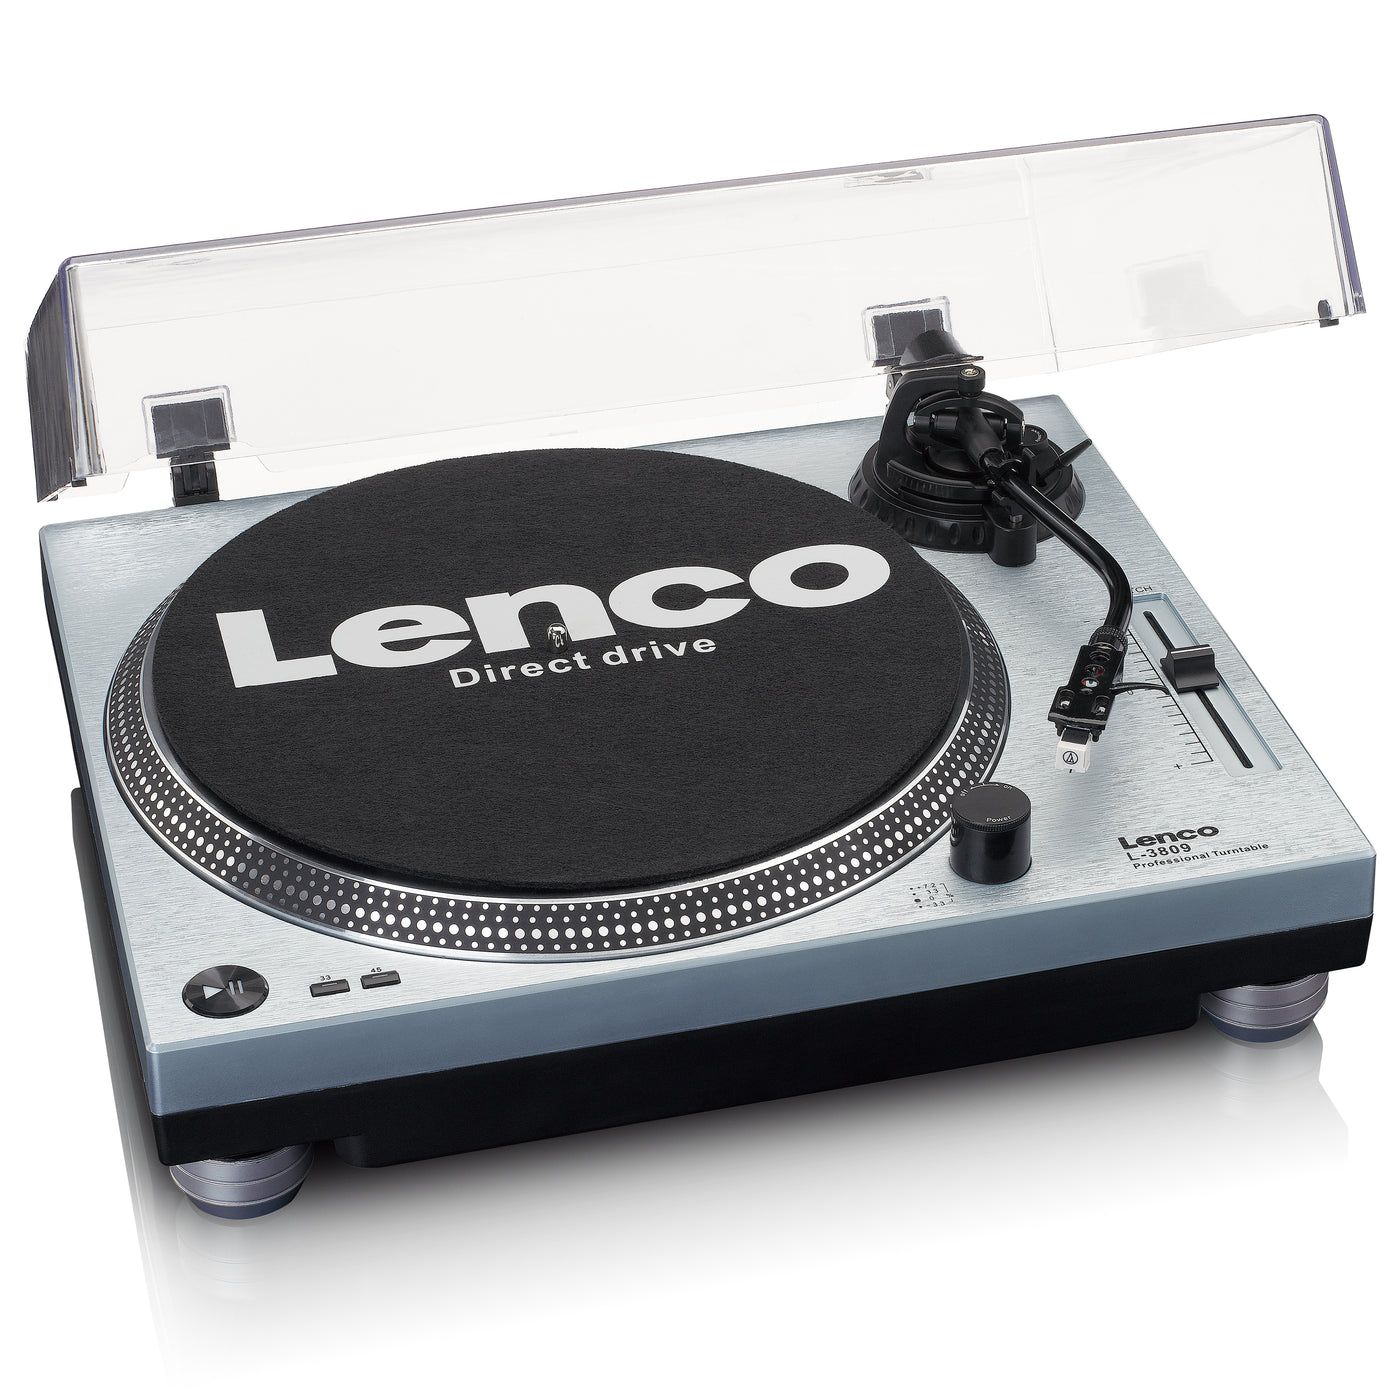 LENCO L-3809ME - Direct drive turntable with USB / PC Encoding - Metallic blue